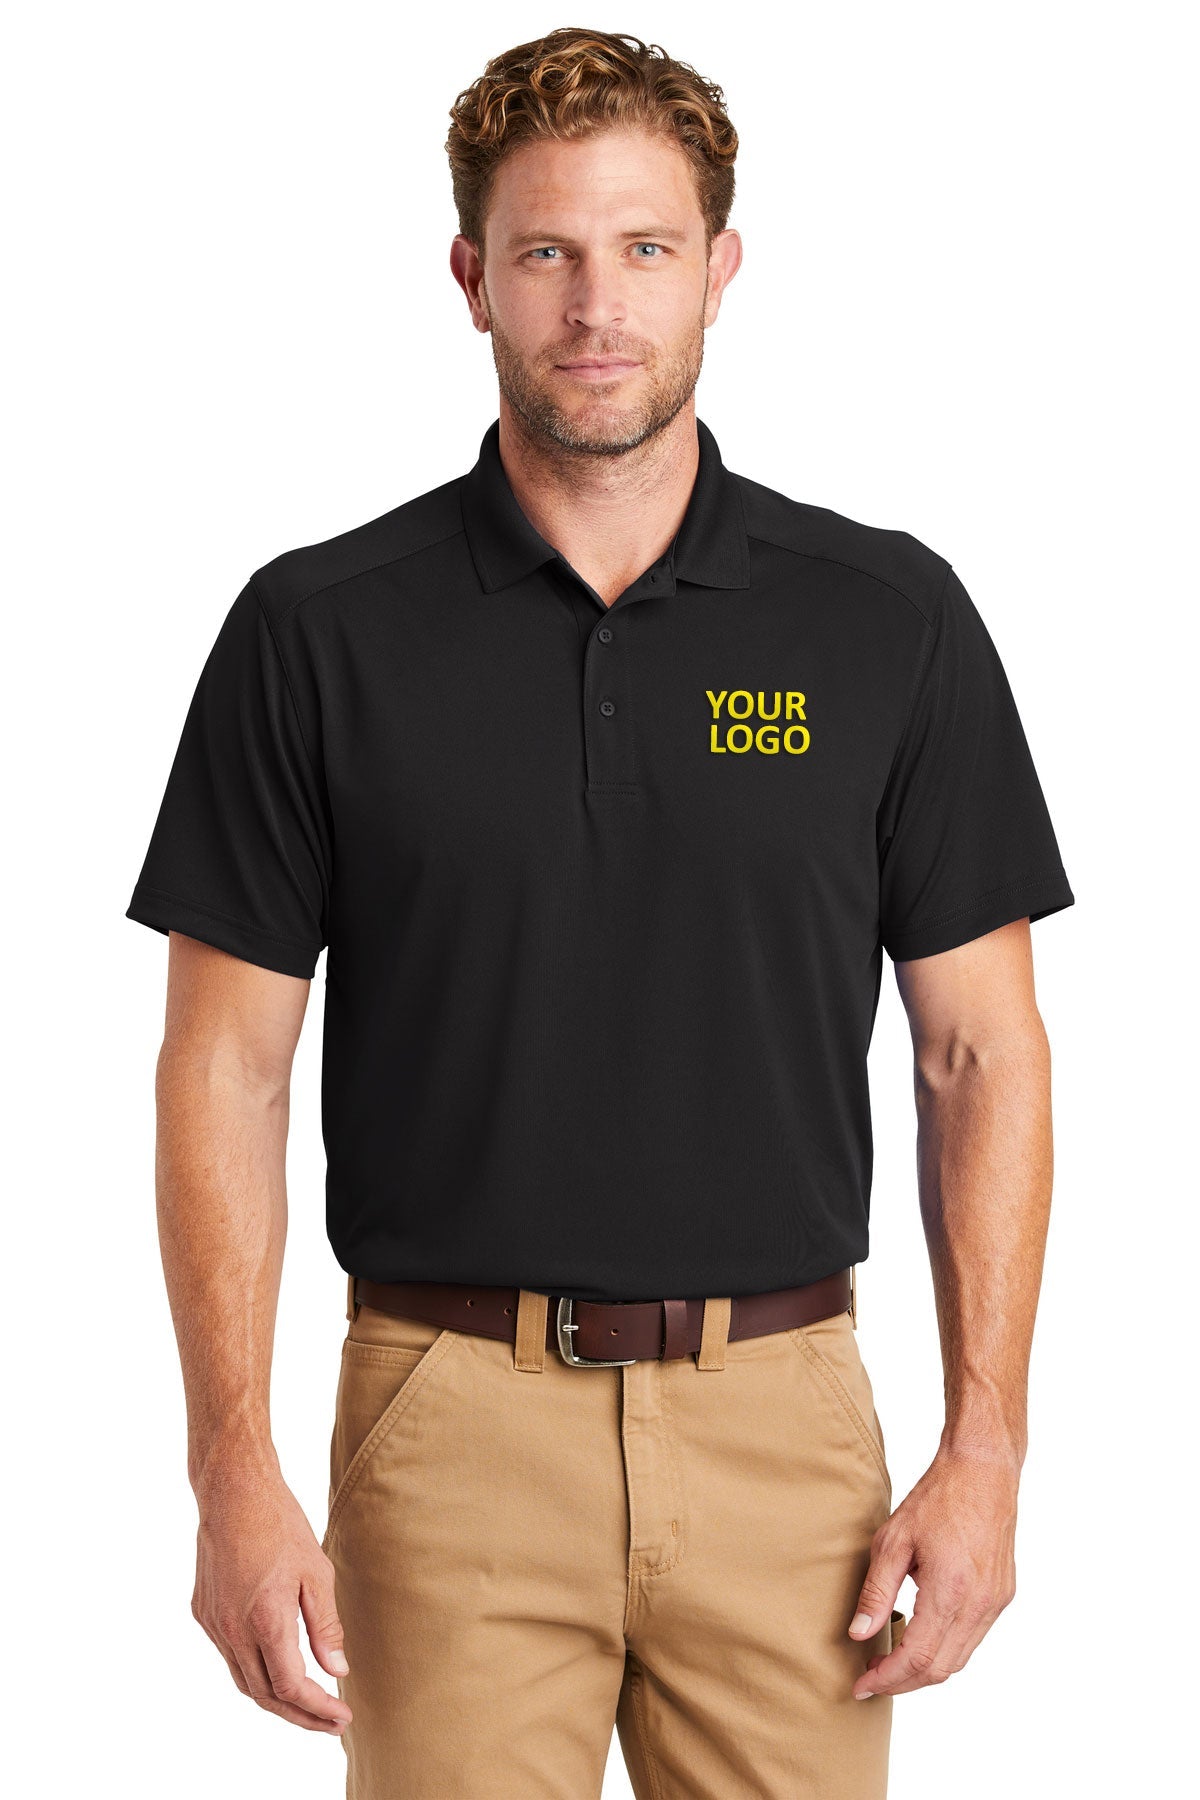 CornerStone Black CS418 custom polo shirts for business